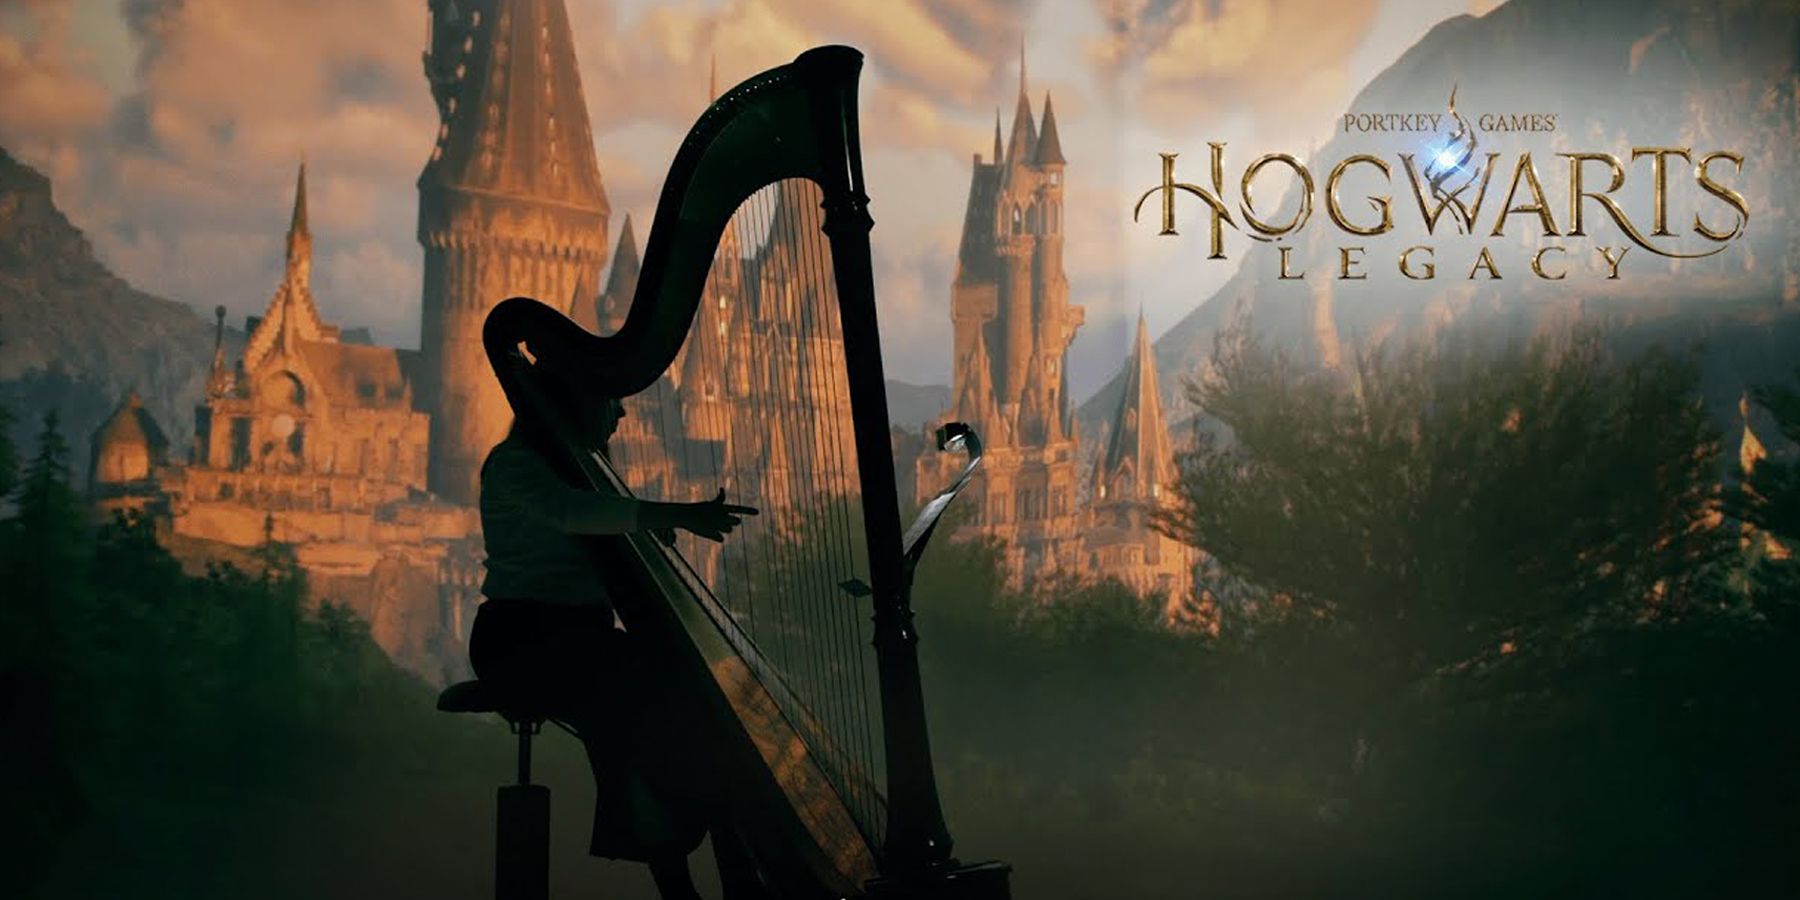 Hogwarts legacy music cover